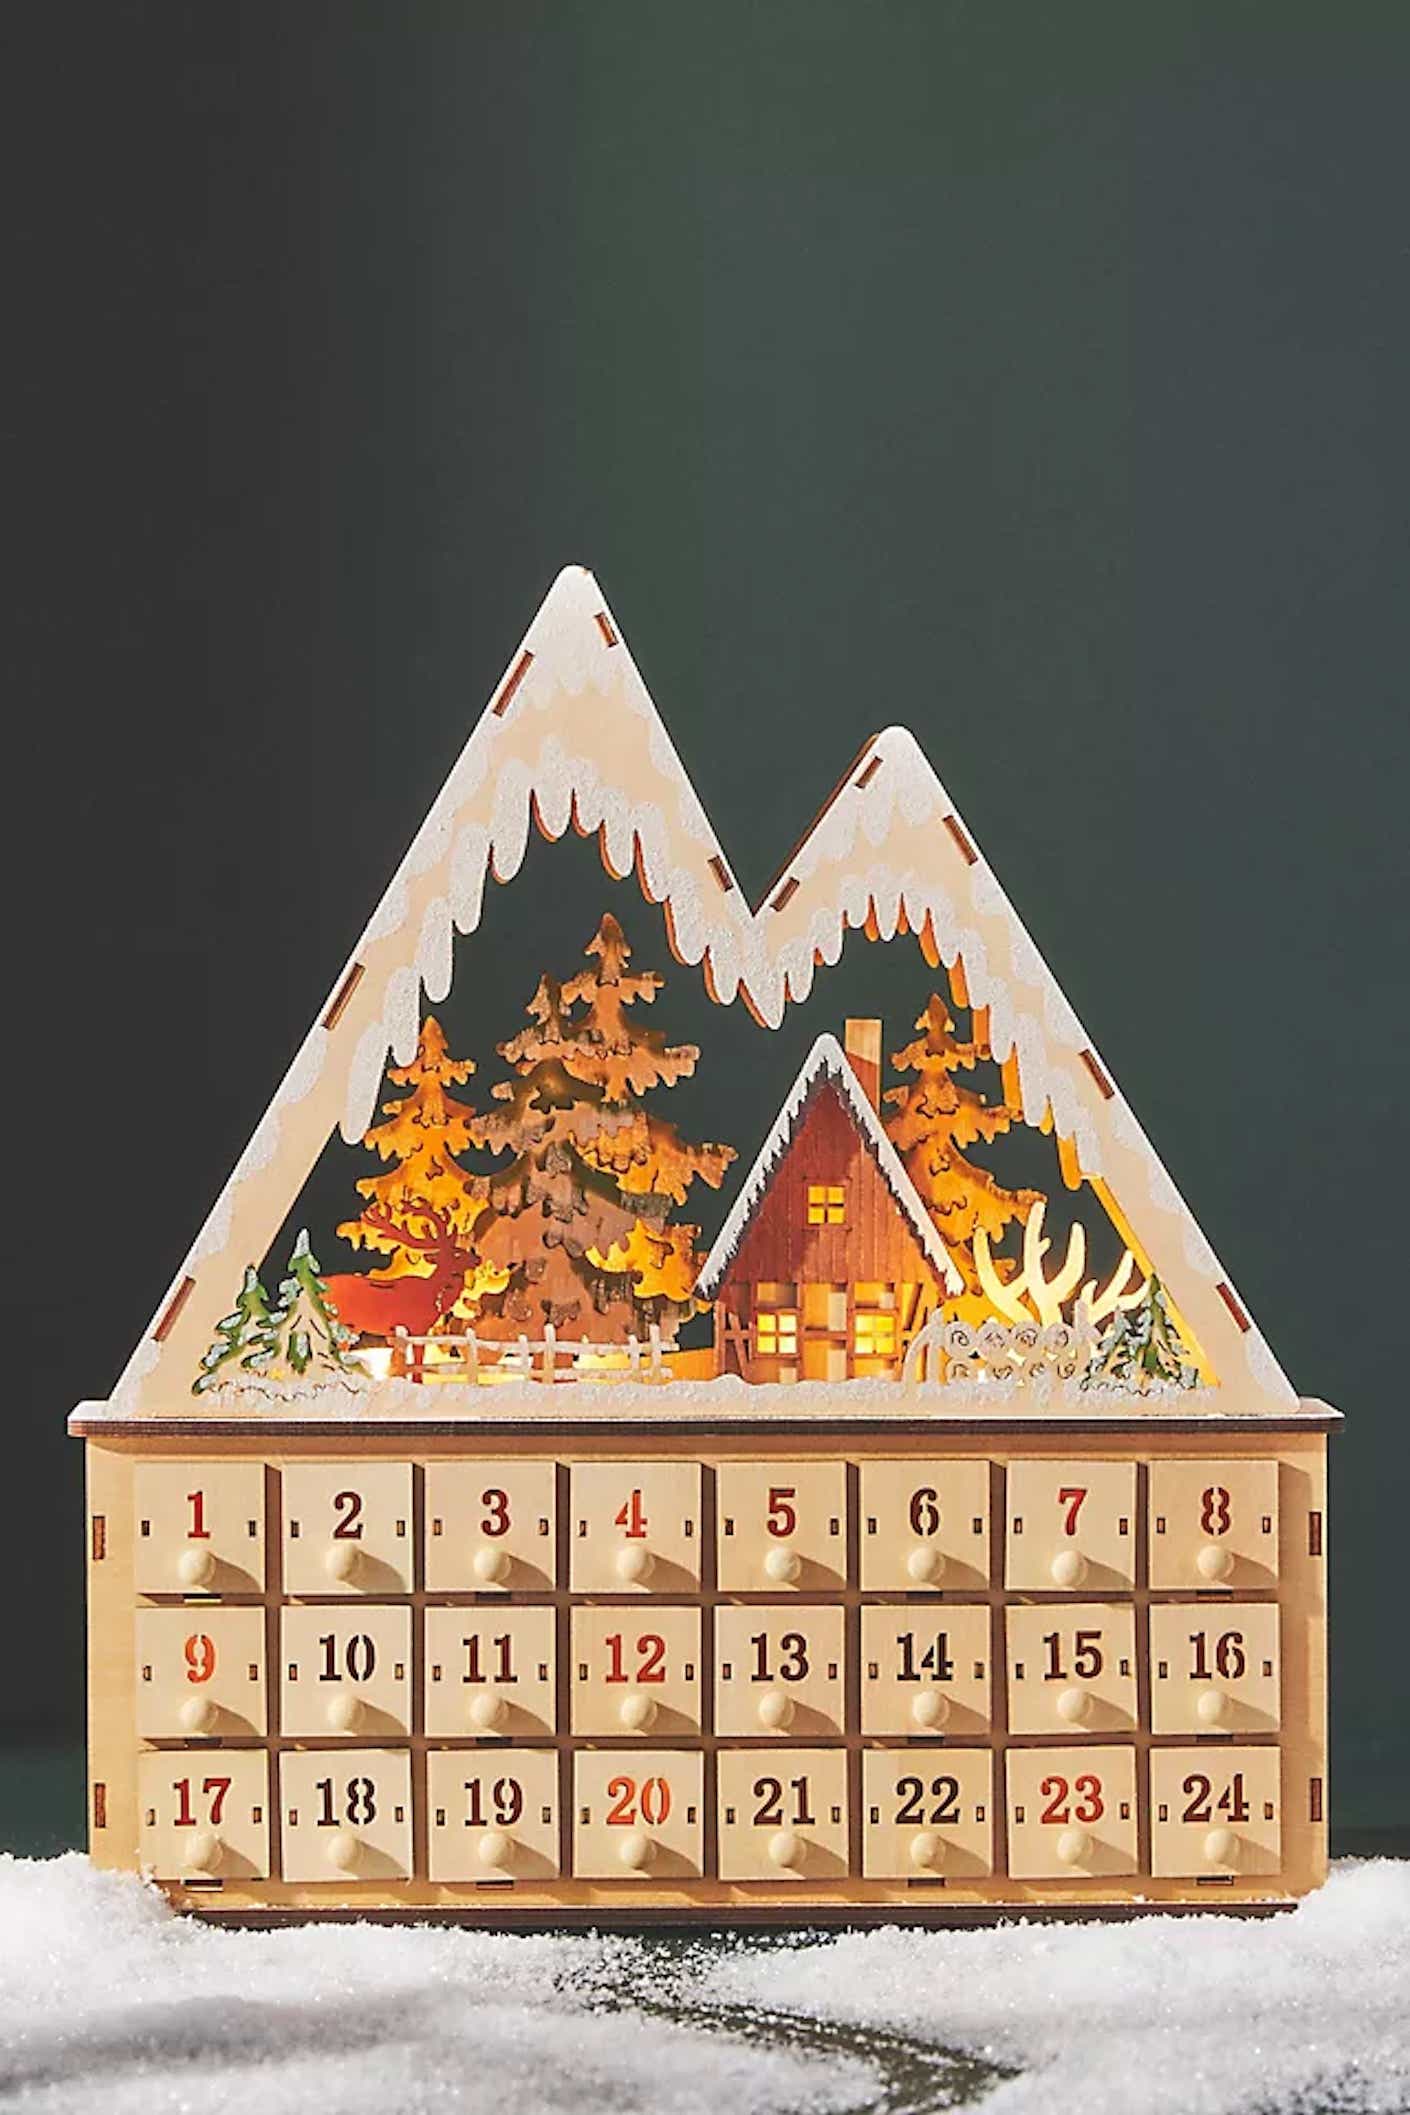 A wooden advent calendar shaped like a house